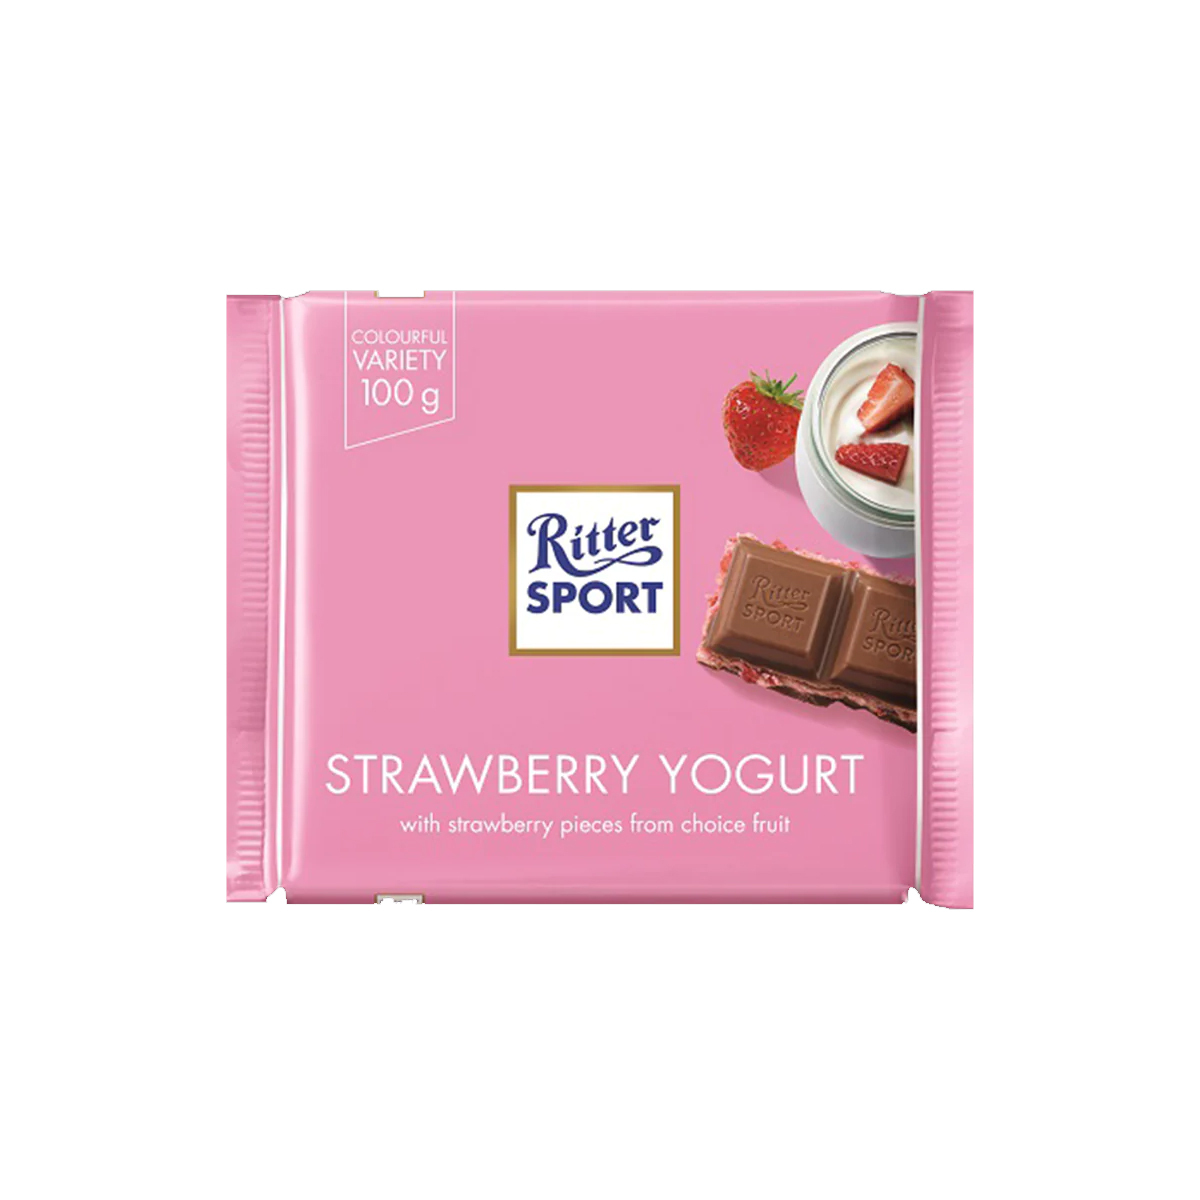 Ritter Sport-Strawberry Yogurt 100g